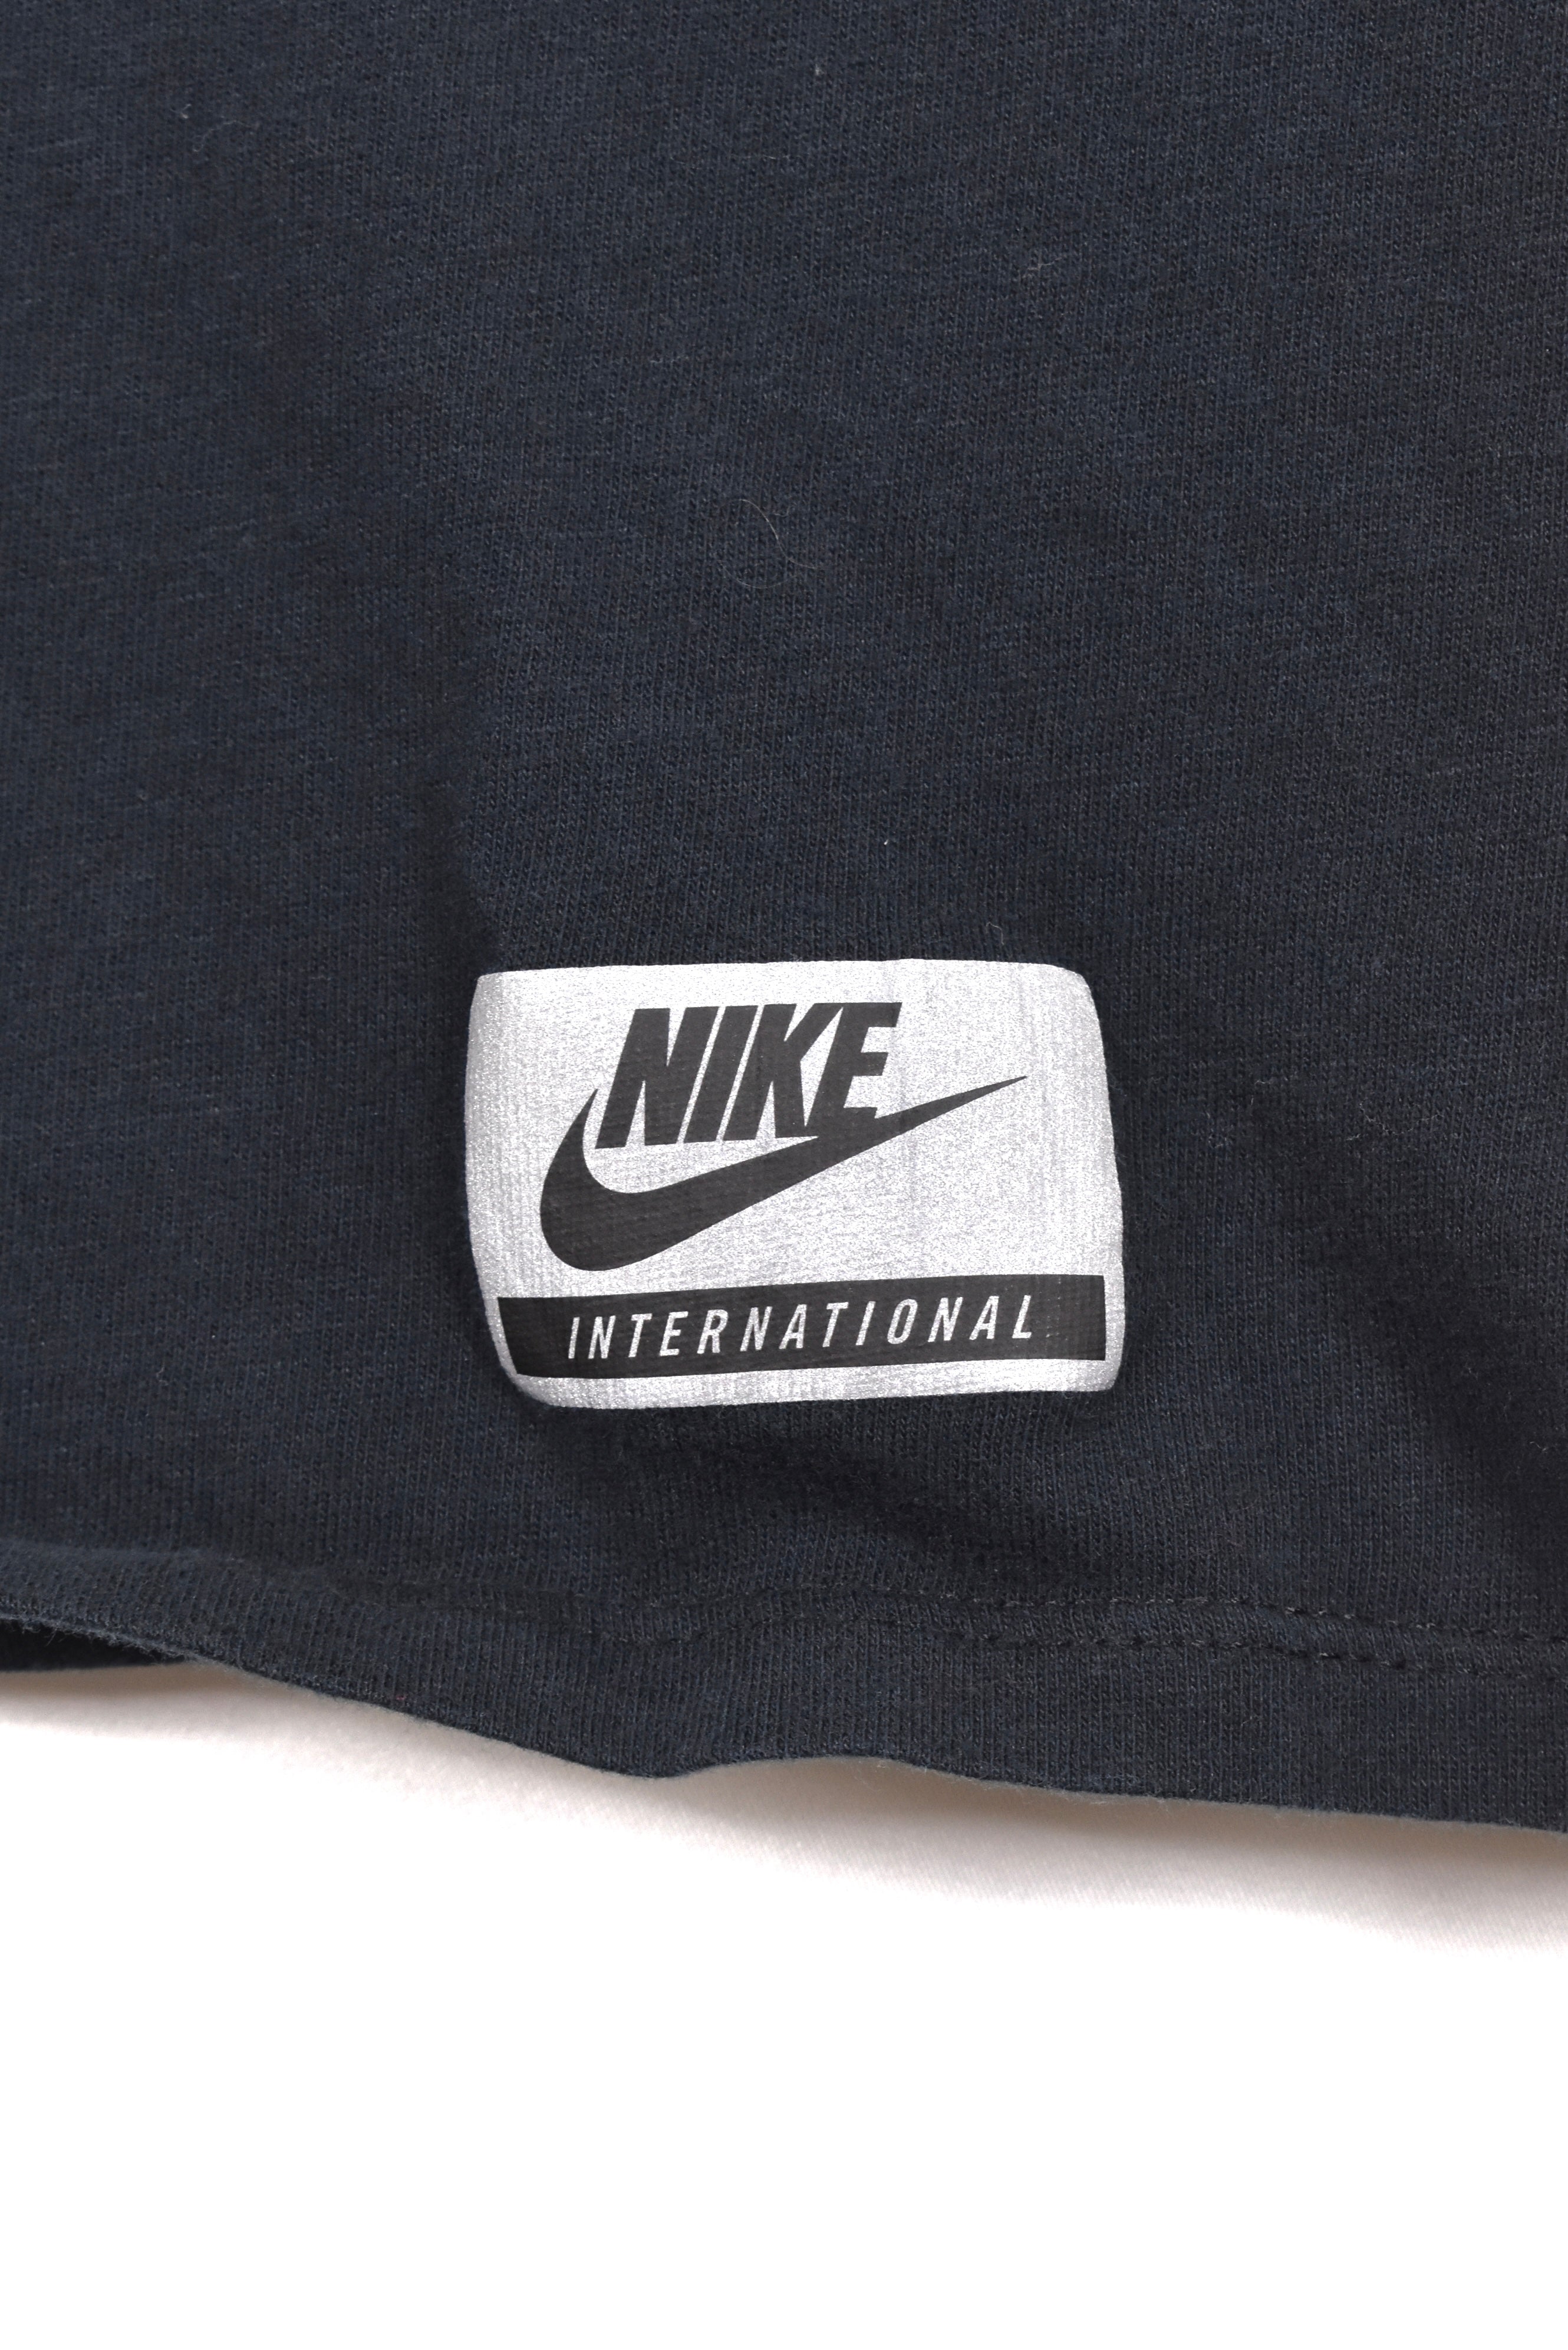 Women's modern Nike shirt, black graphic tee - AU S NIKE